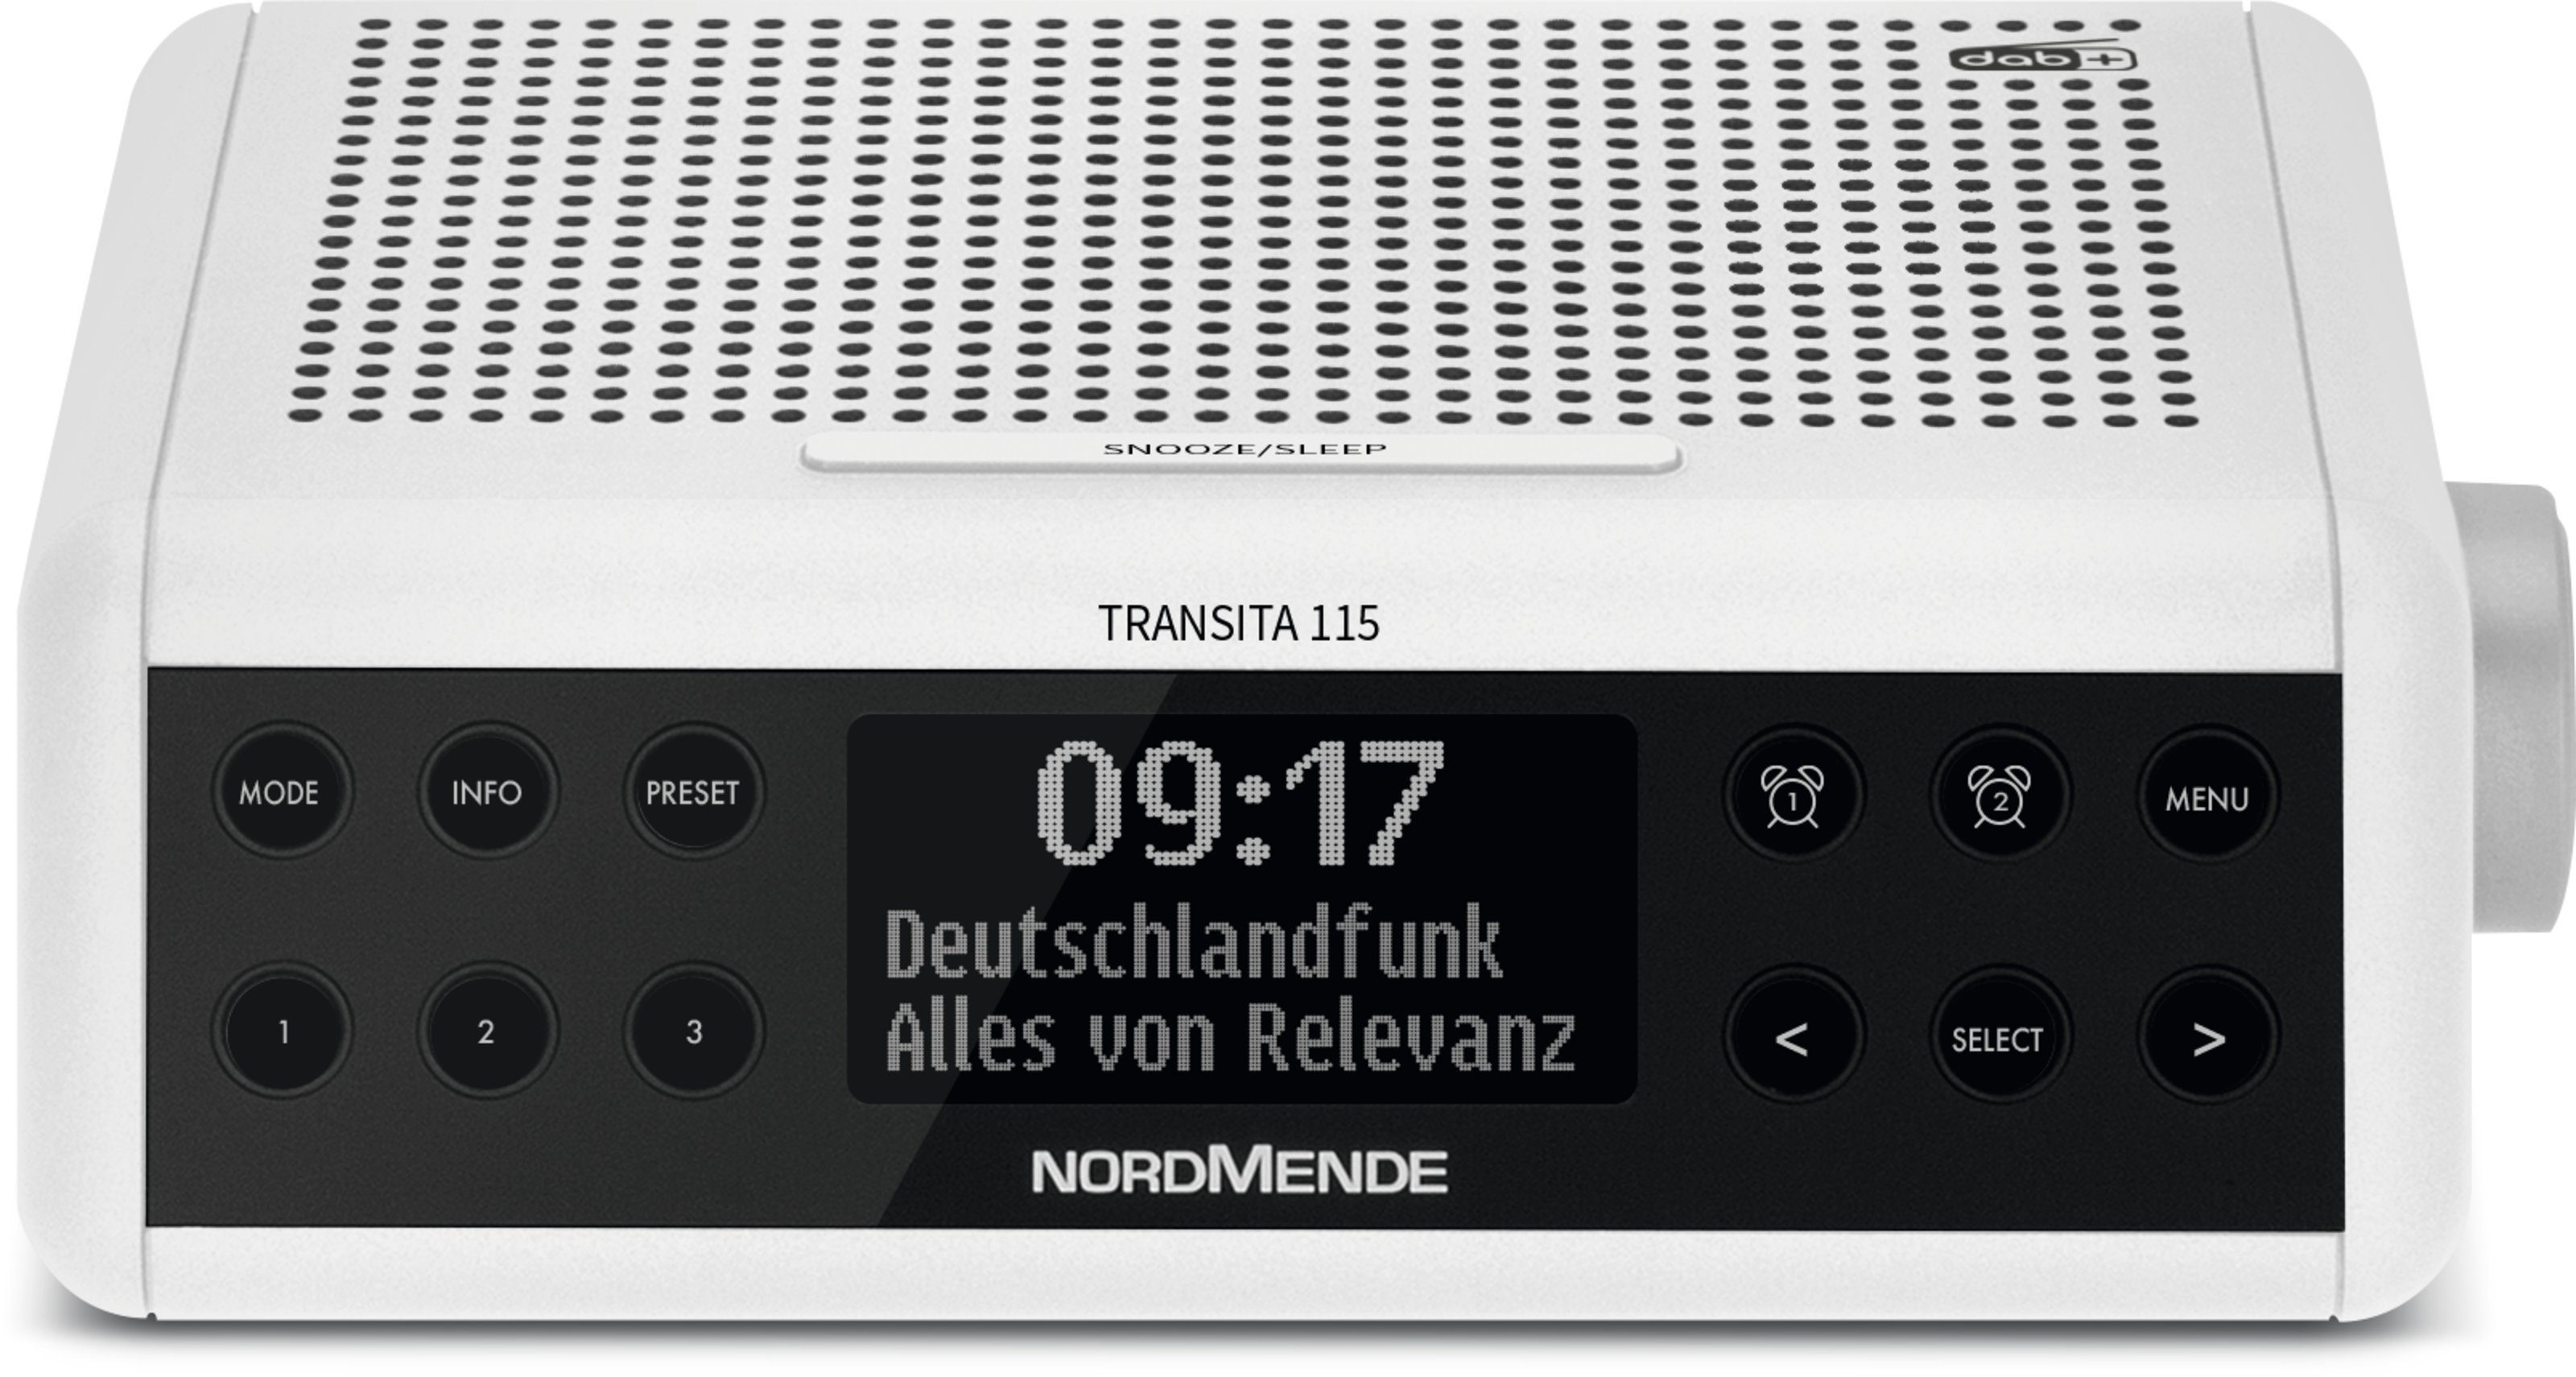 Nordmende Transita 115 Uhrenradio (Digitalradio (DAB), UKW, 3,00 W, Sleep Timer, Radiowecker, Snooze-Funktion)